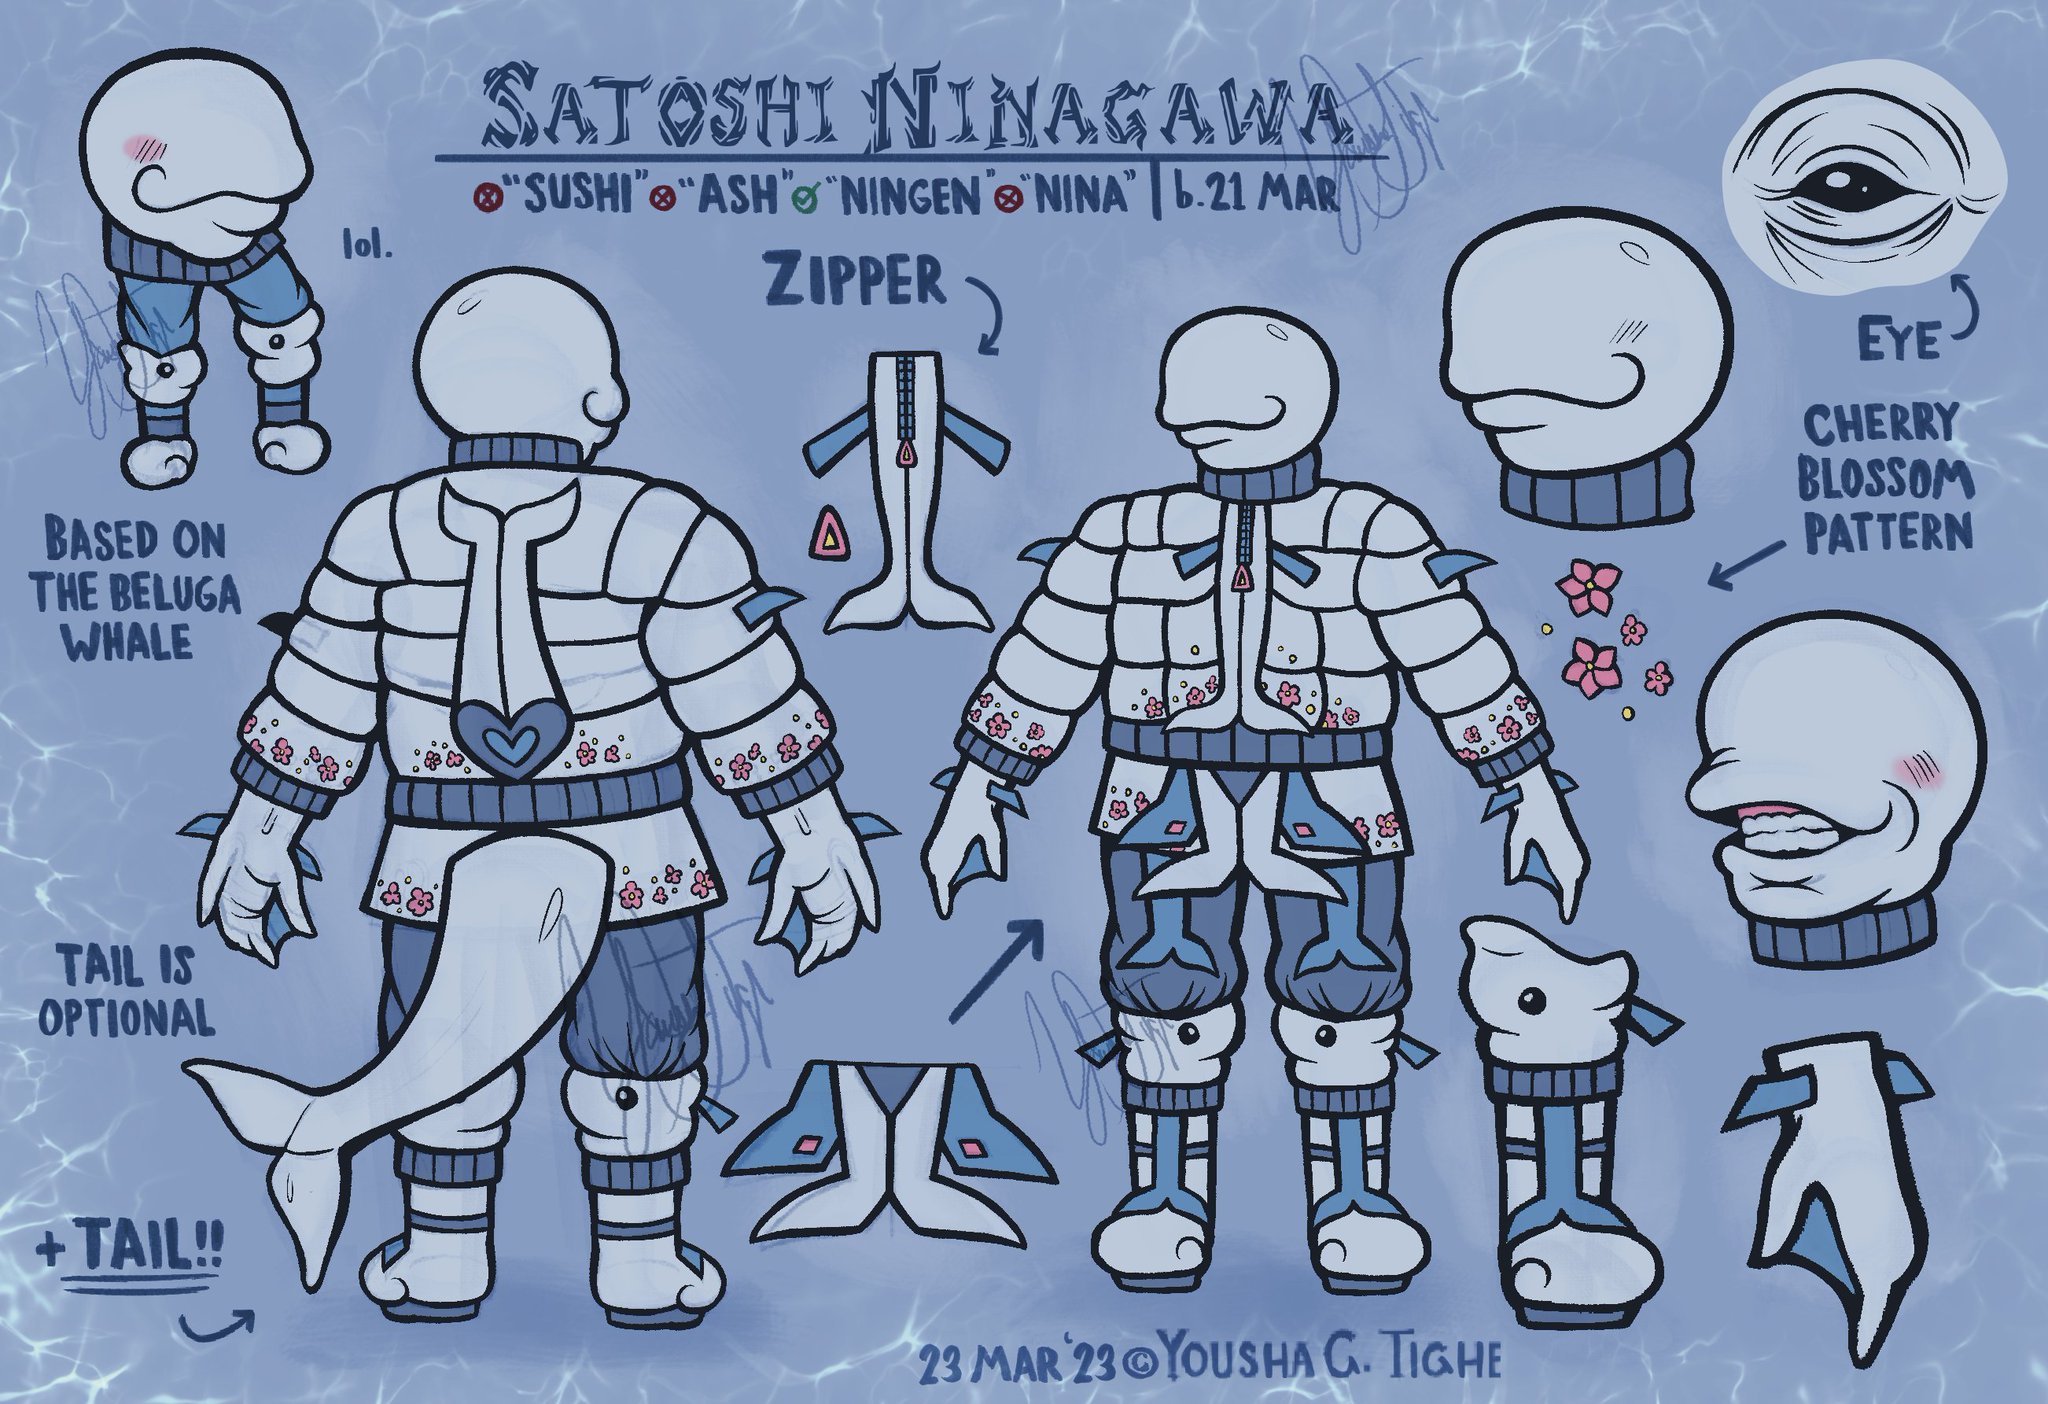 Dream's character sheet by icySamurai on DeviantArt